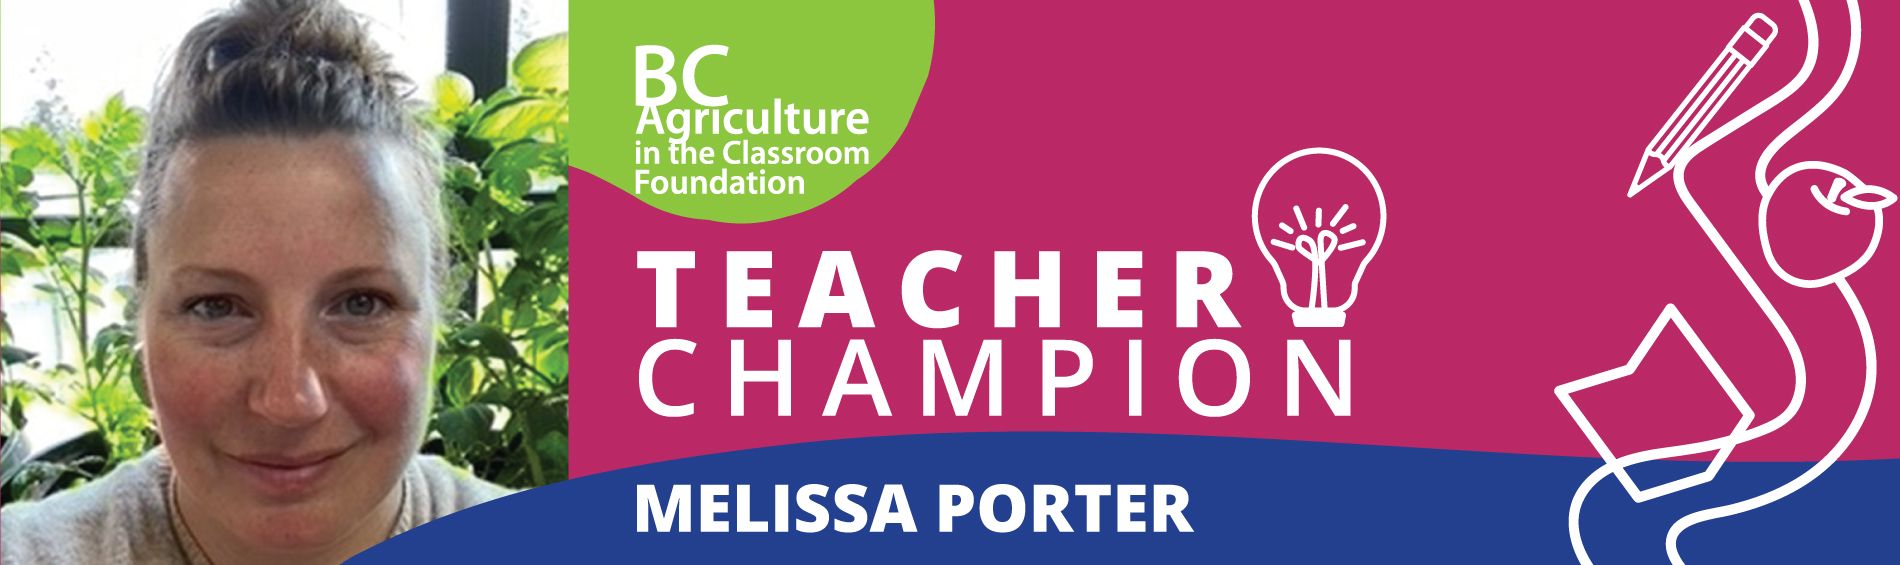 Teacher Champion - Melissa Porter